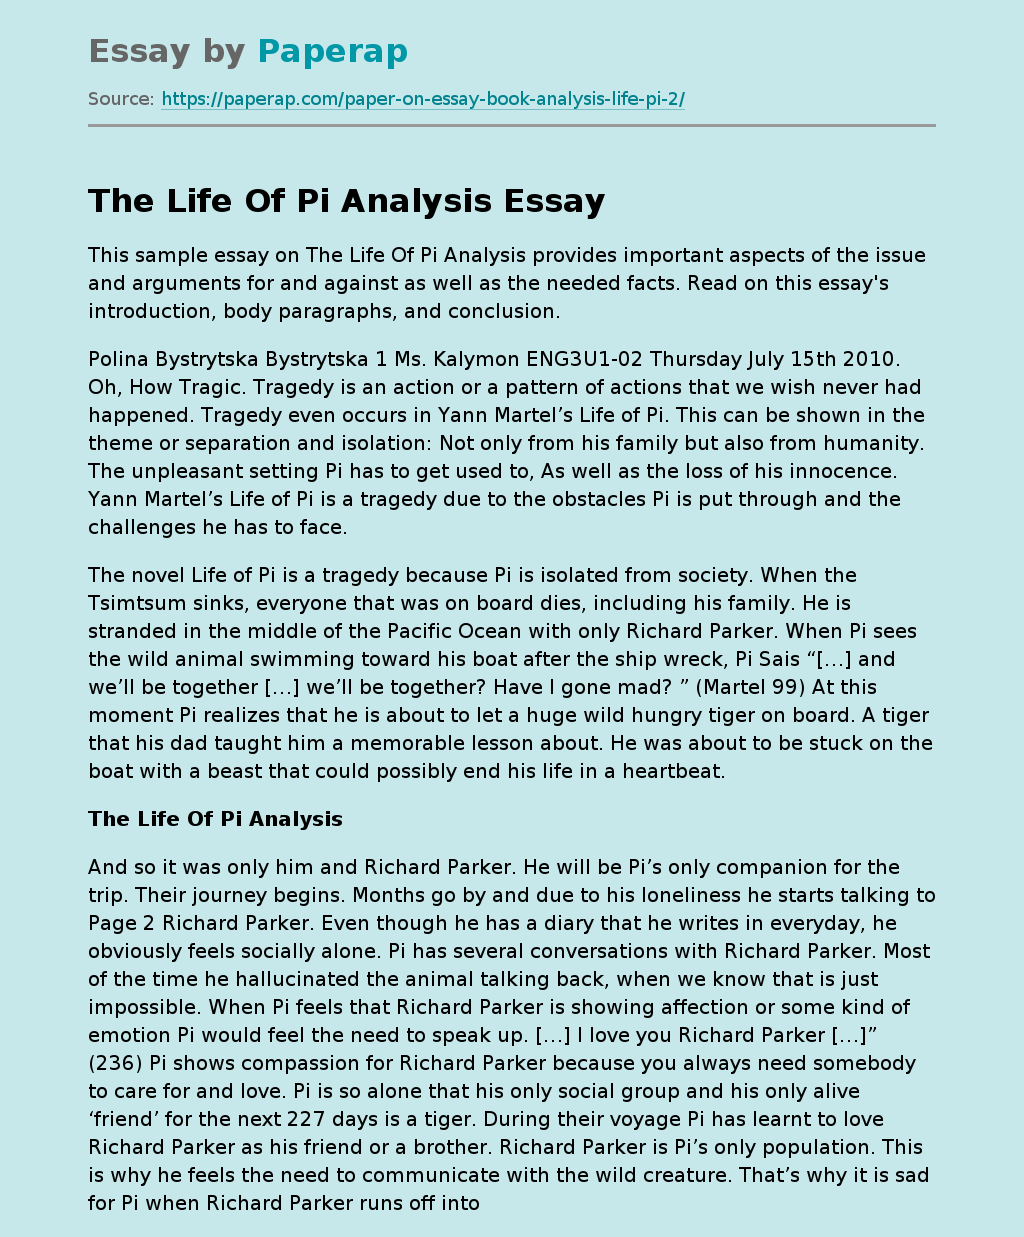 Analysis of the Novel “Life of Pi”